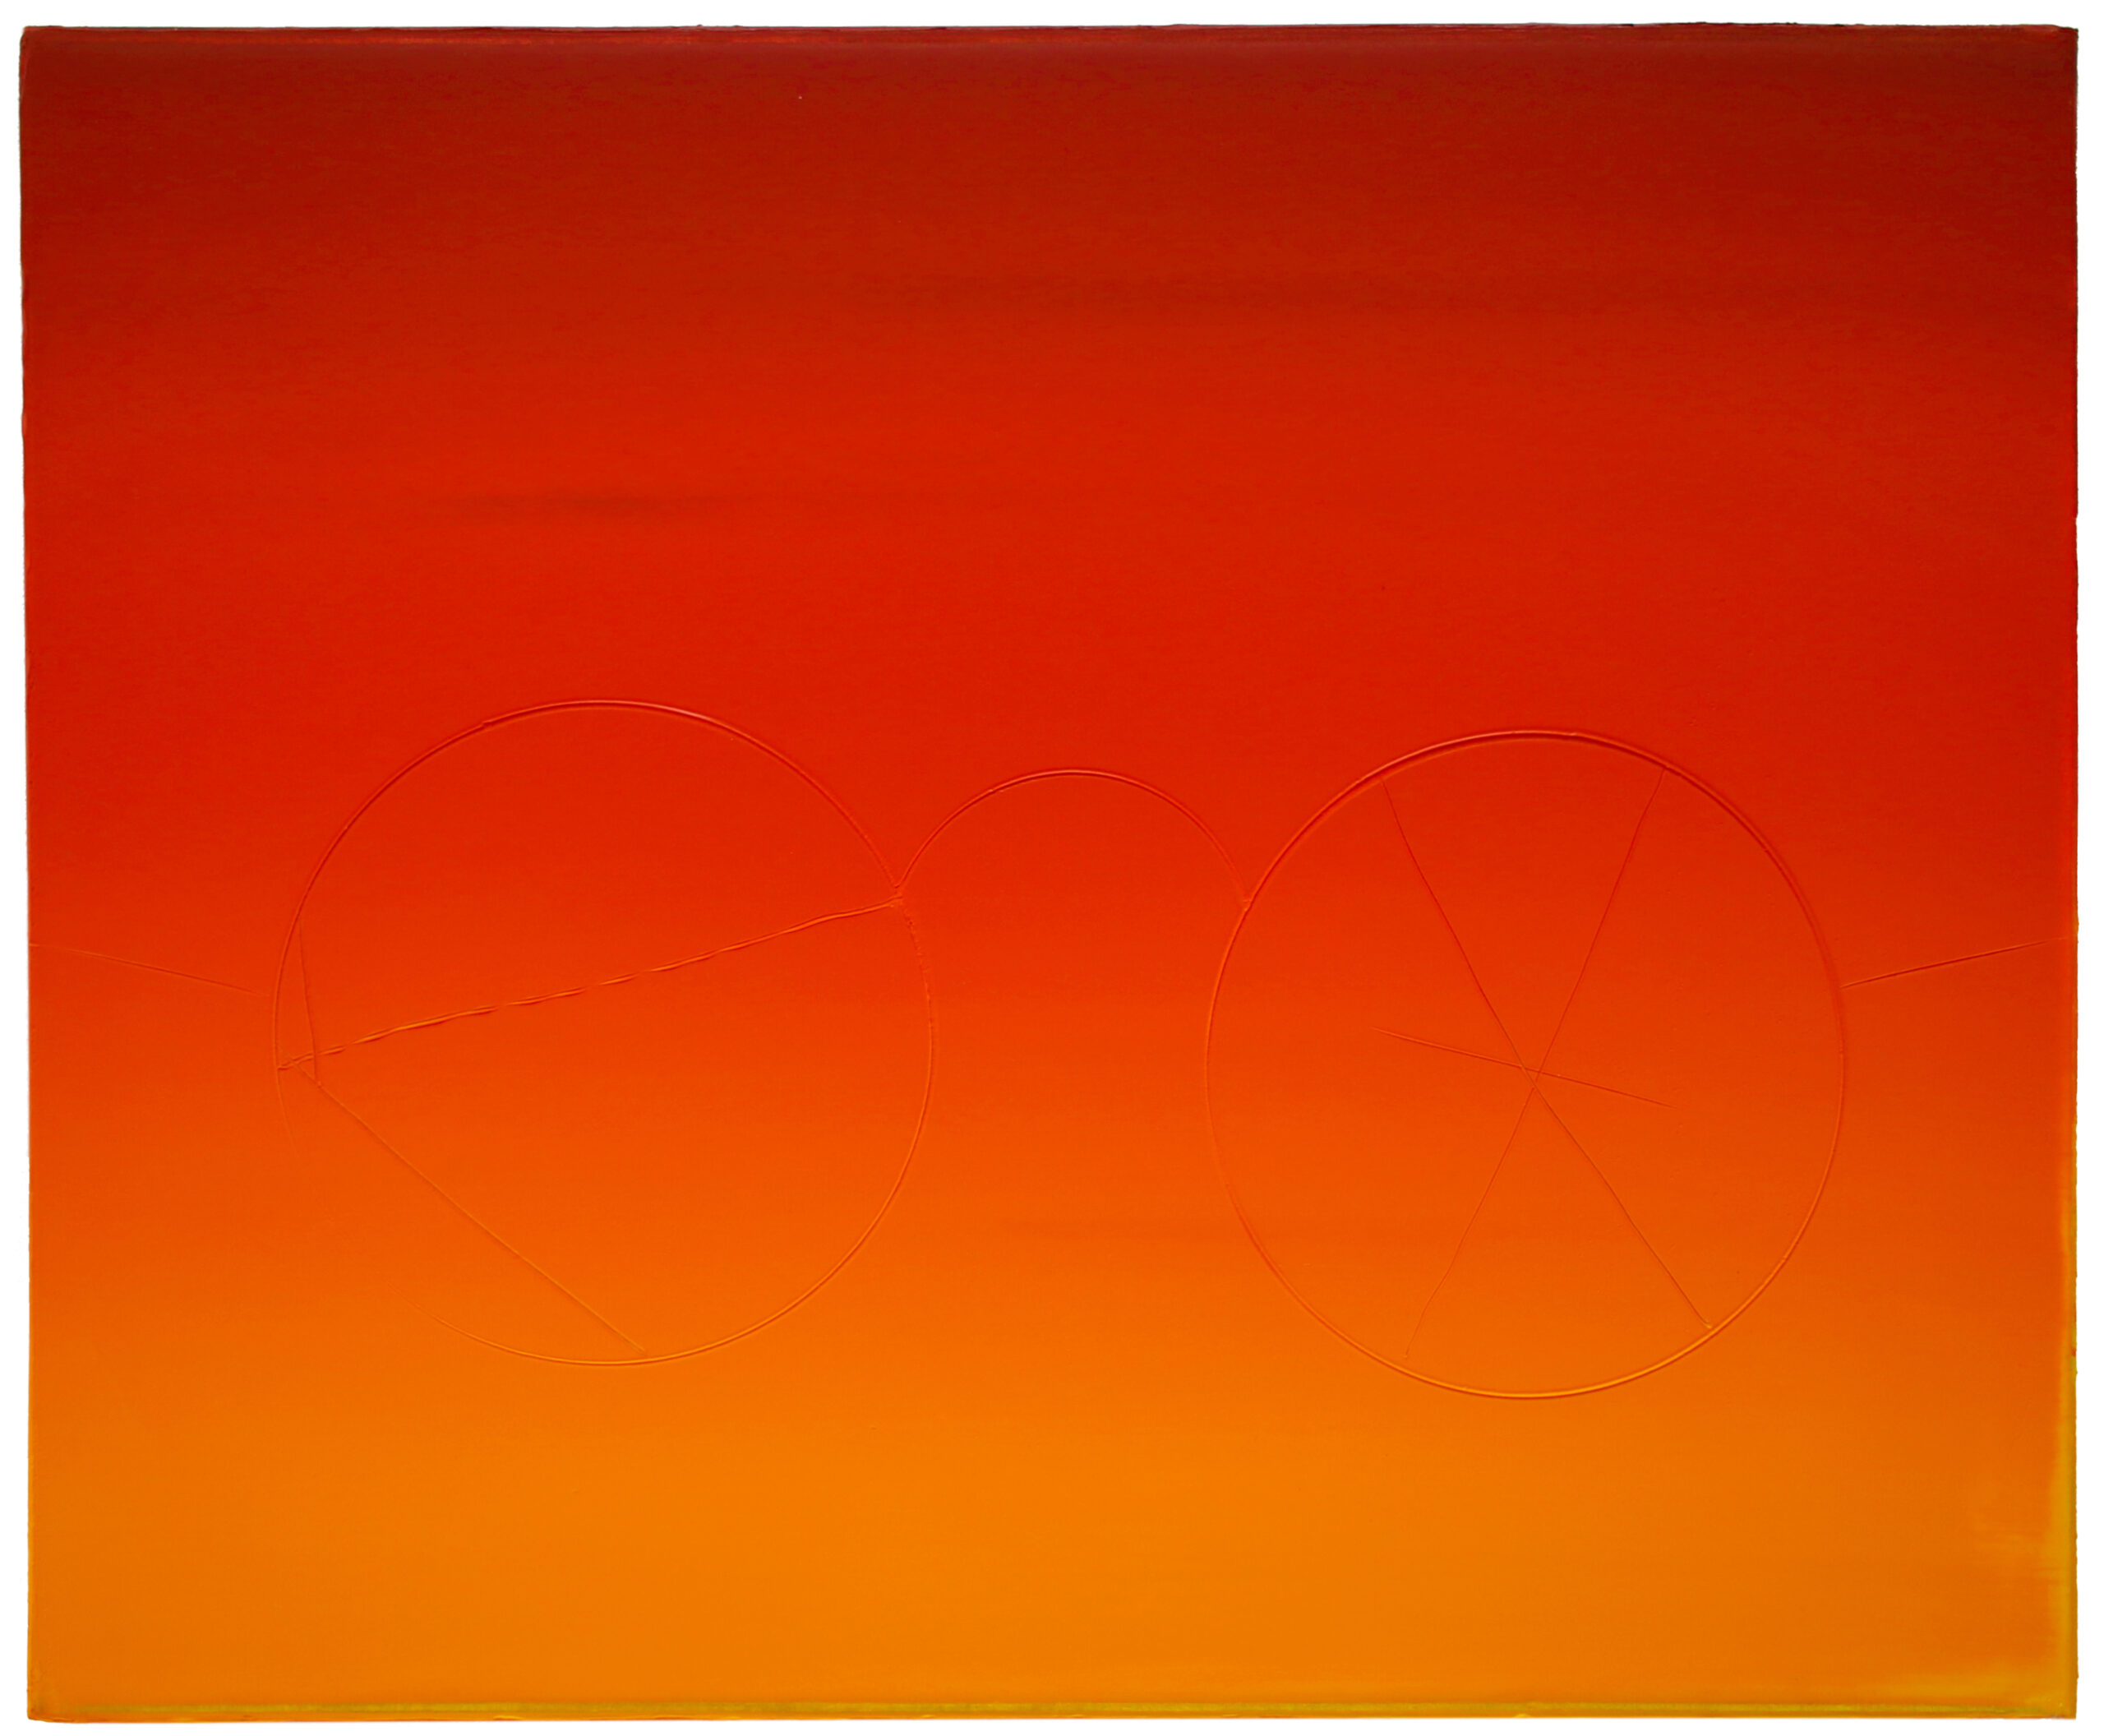 Sunset, oil on canvas 59x72 cm, 2018